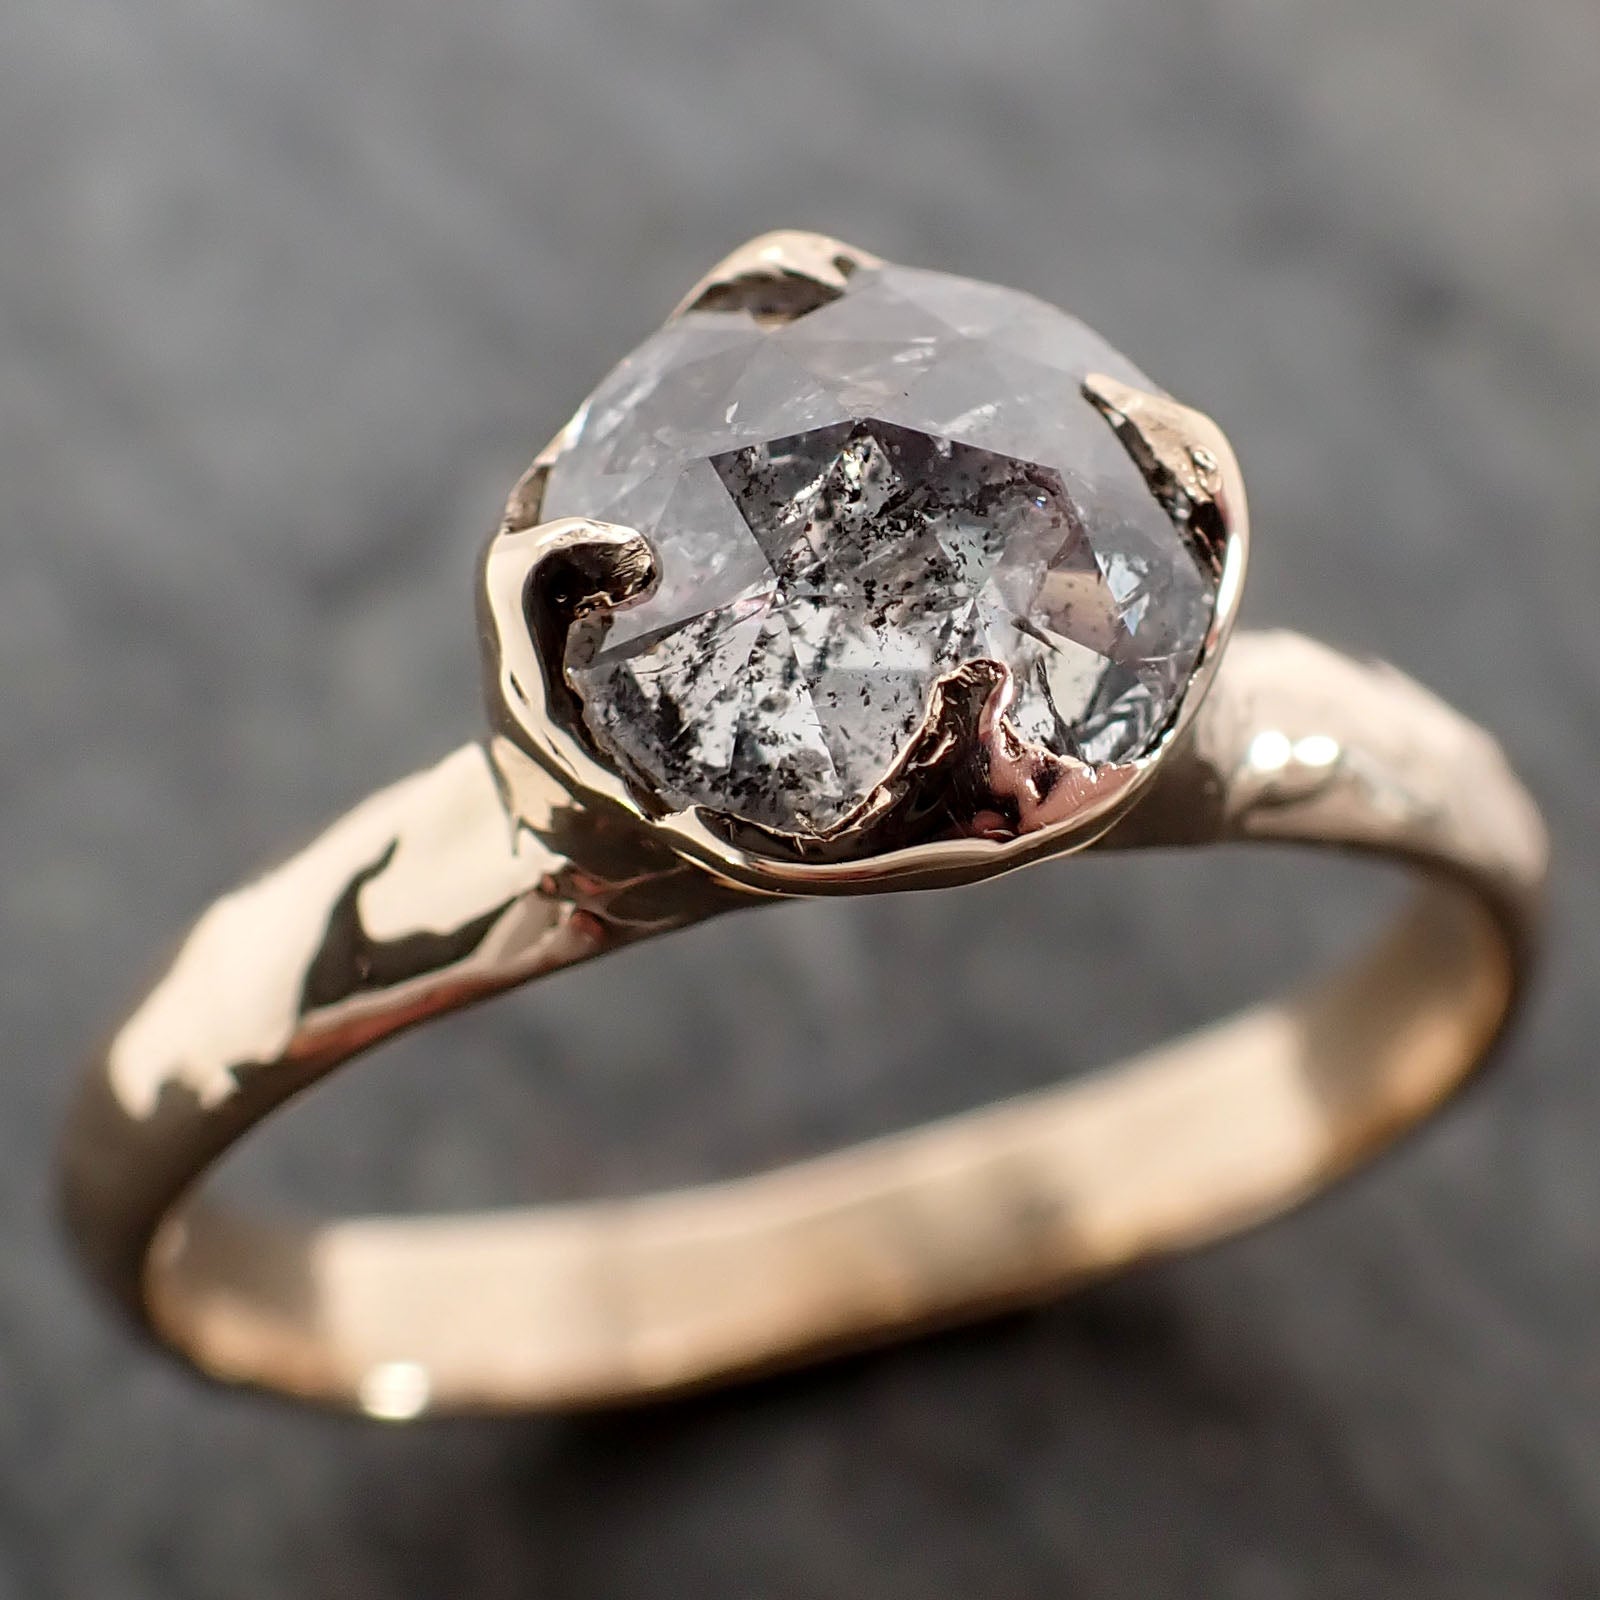 Fancy cut salt and pepper Diamond Solitaire Engagement 14k yellow Gold Wedding Ring Diamond Ring byAngeline 2857